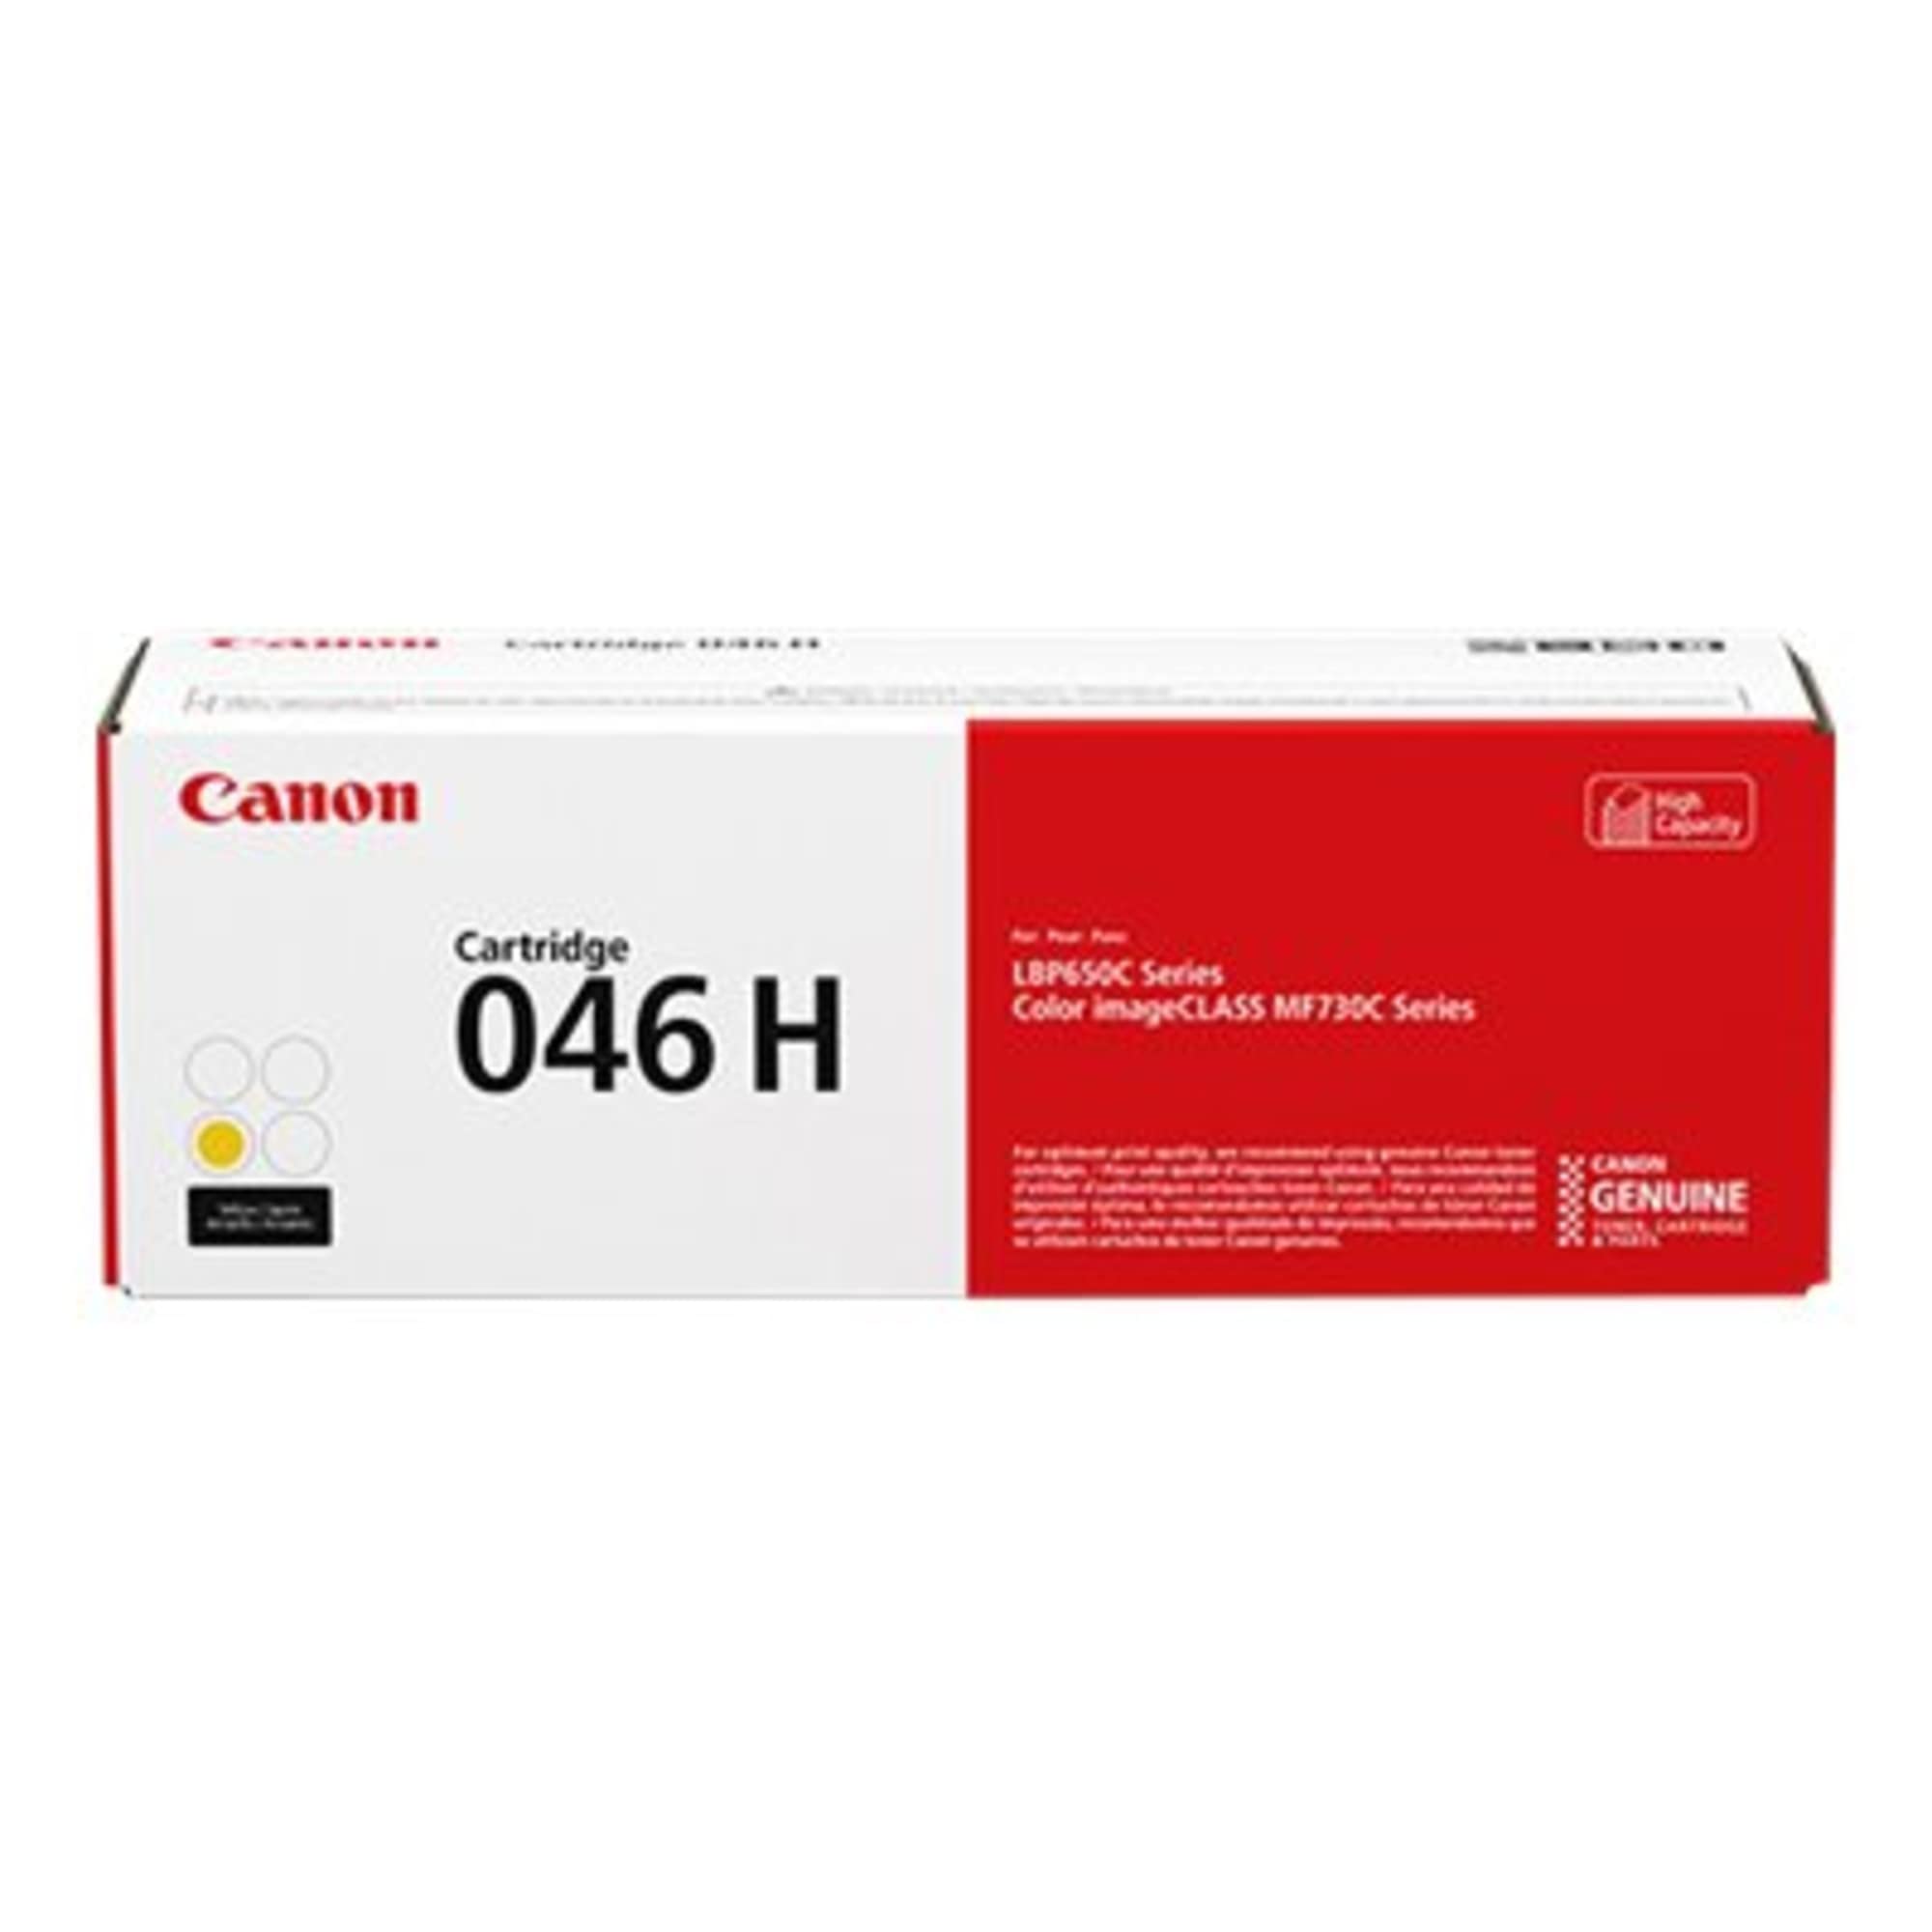 Canon Genuine Toner, Cartridge 046 Yellow, High Capacity (1251C001), 1 Pack Color imageCLASS MF735Cdw, MF733Cdw, MF731Cdw, LBP654Cdw Laser Printers